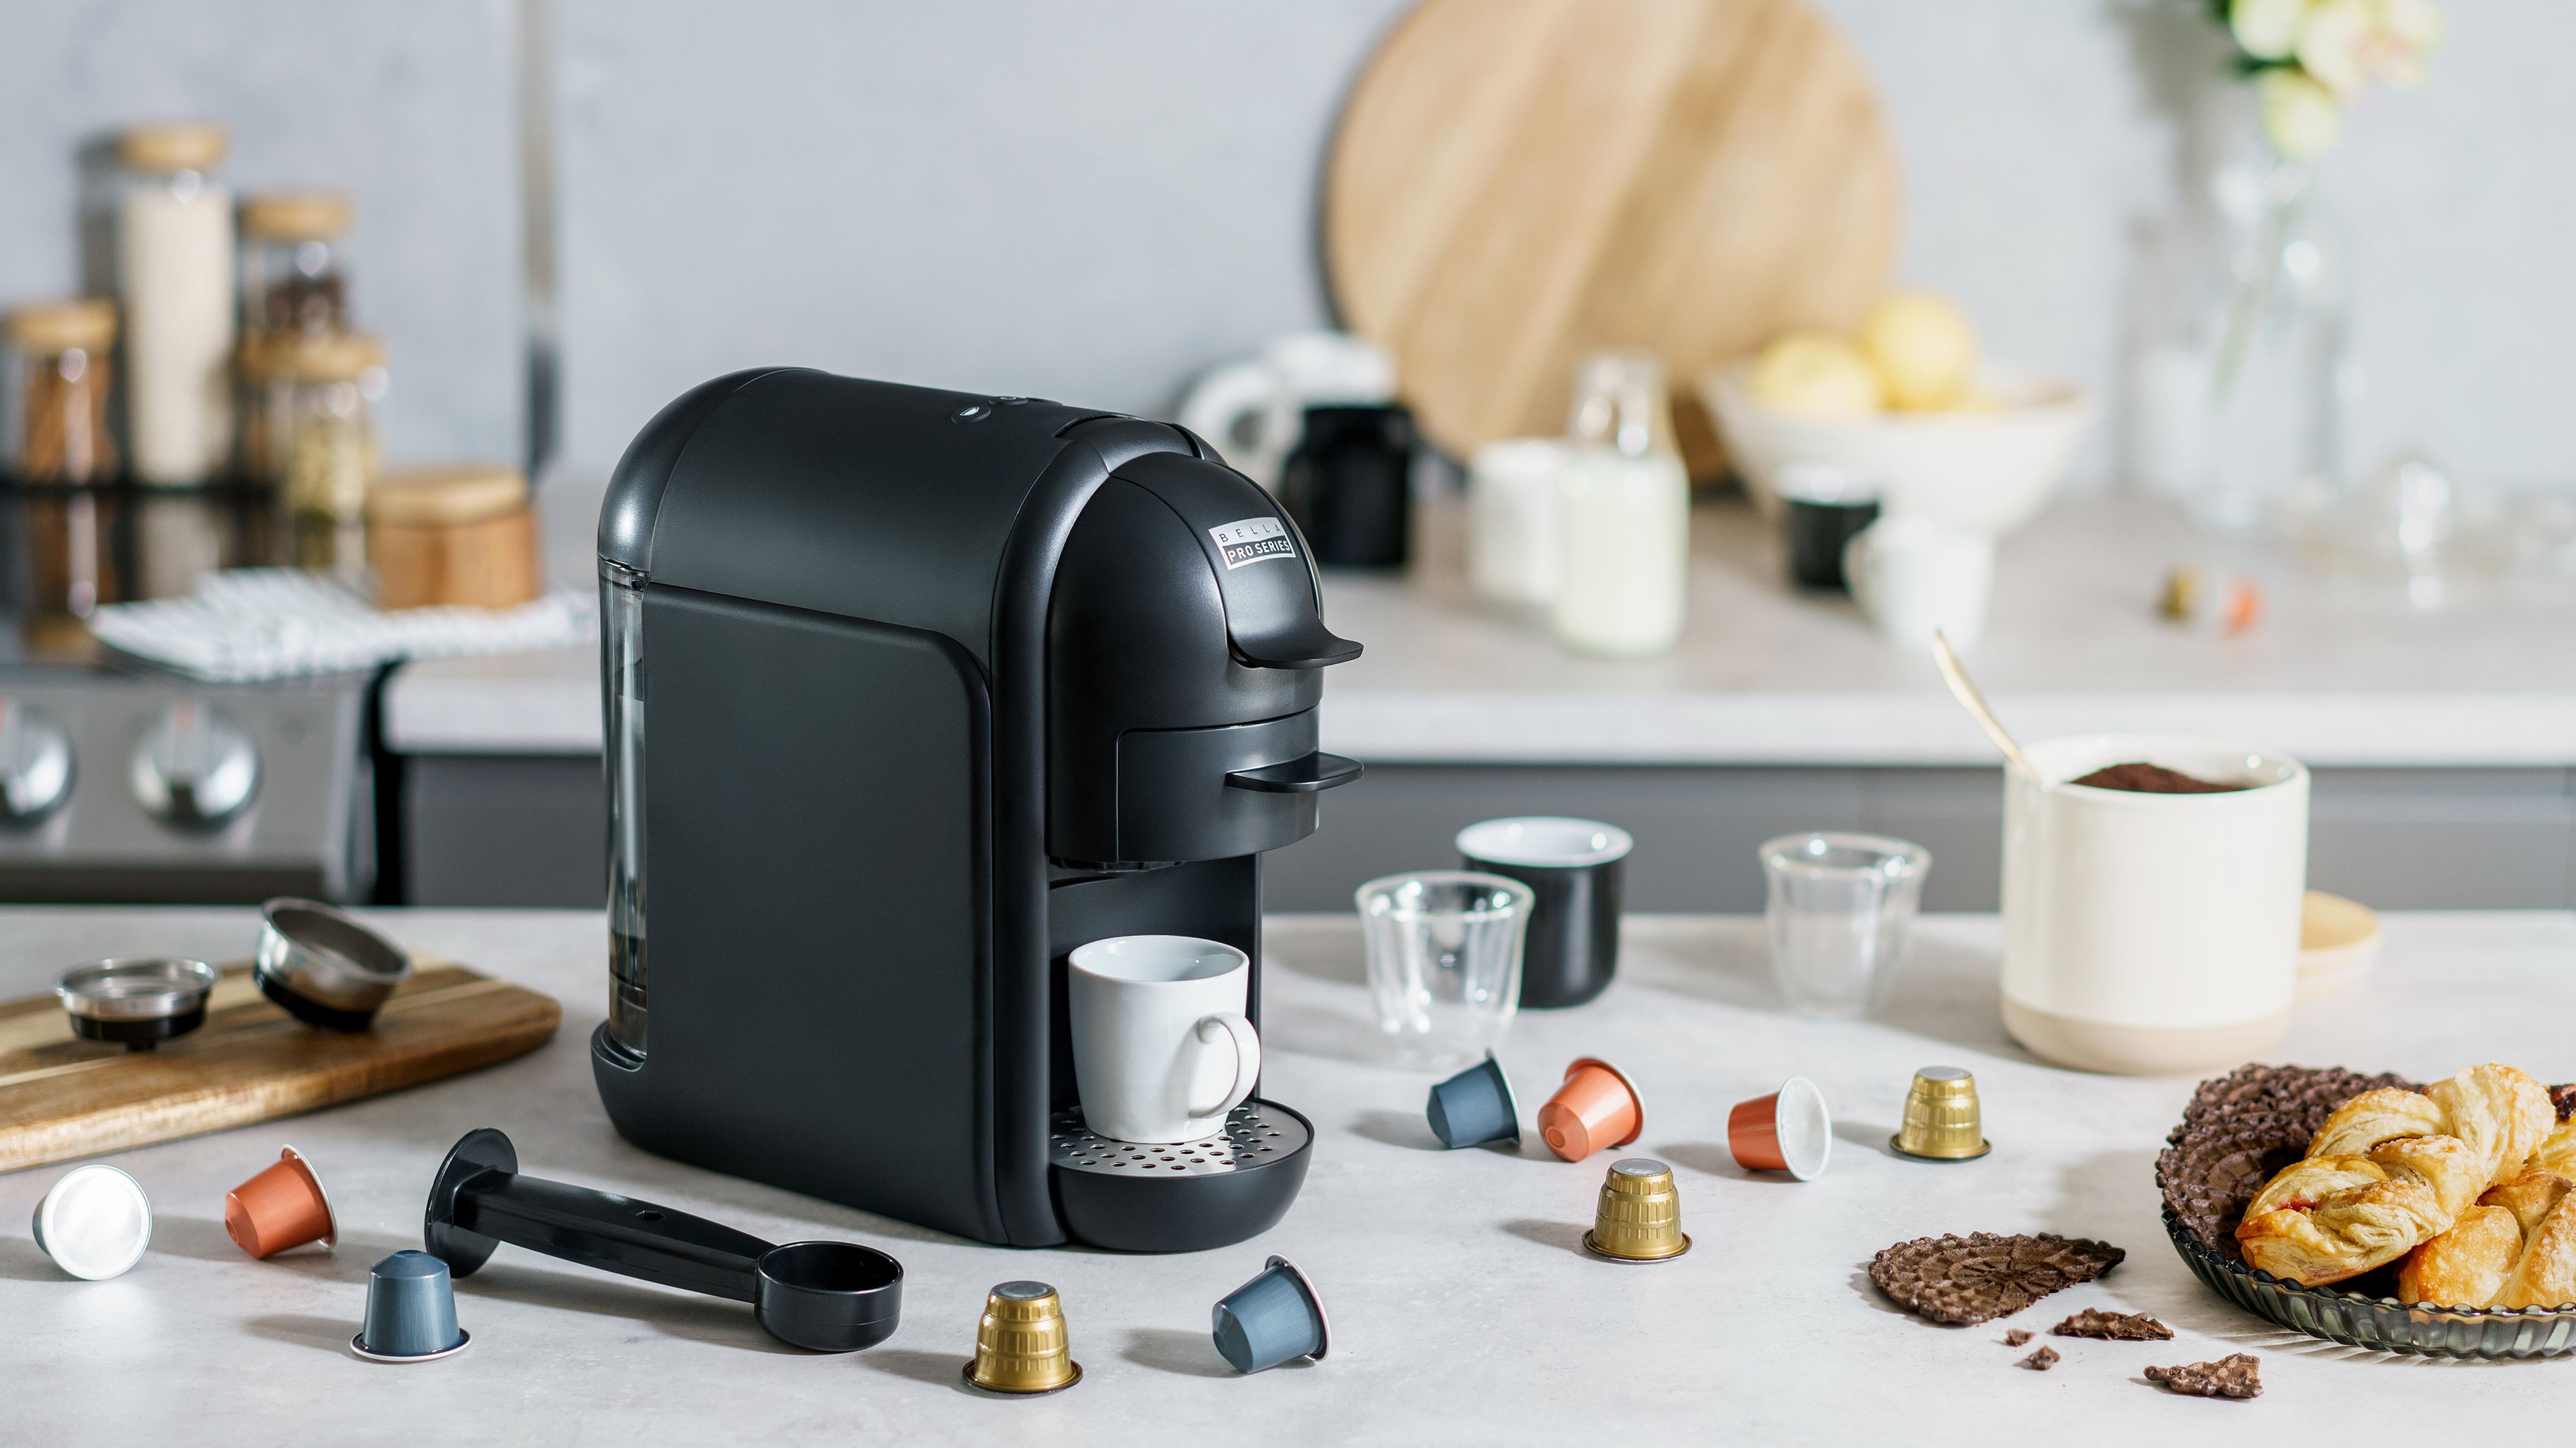  Hamilton Beach Espresso Machine, Compatible with Nespresso  Pods, Single Serve Coffee Maker, Powerful Italian 19 Bar Pump, 22 oz. Water  Reservoir, Custom Cup Size, Holds 13 Capsules, Black (40726): Home & Kitchen